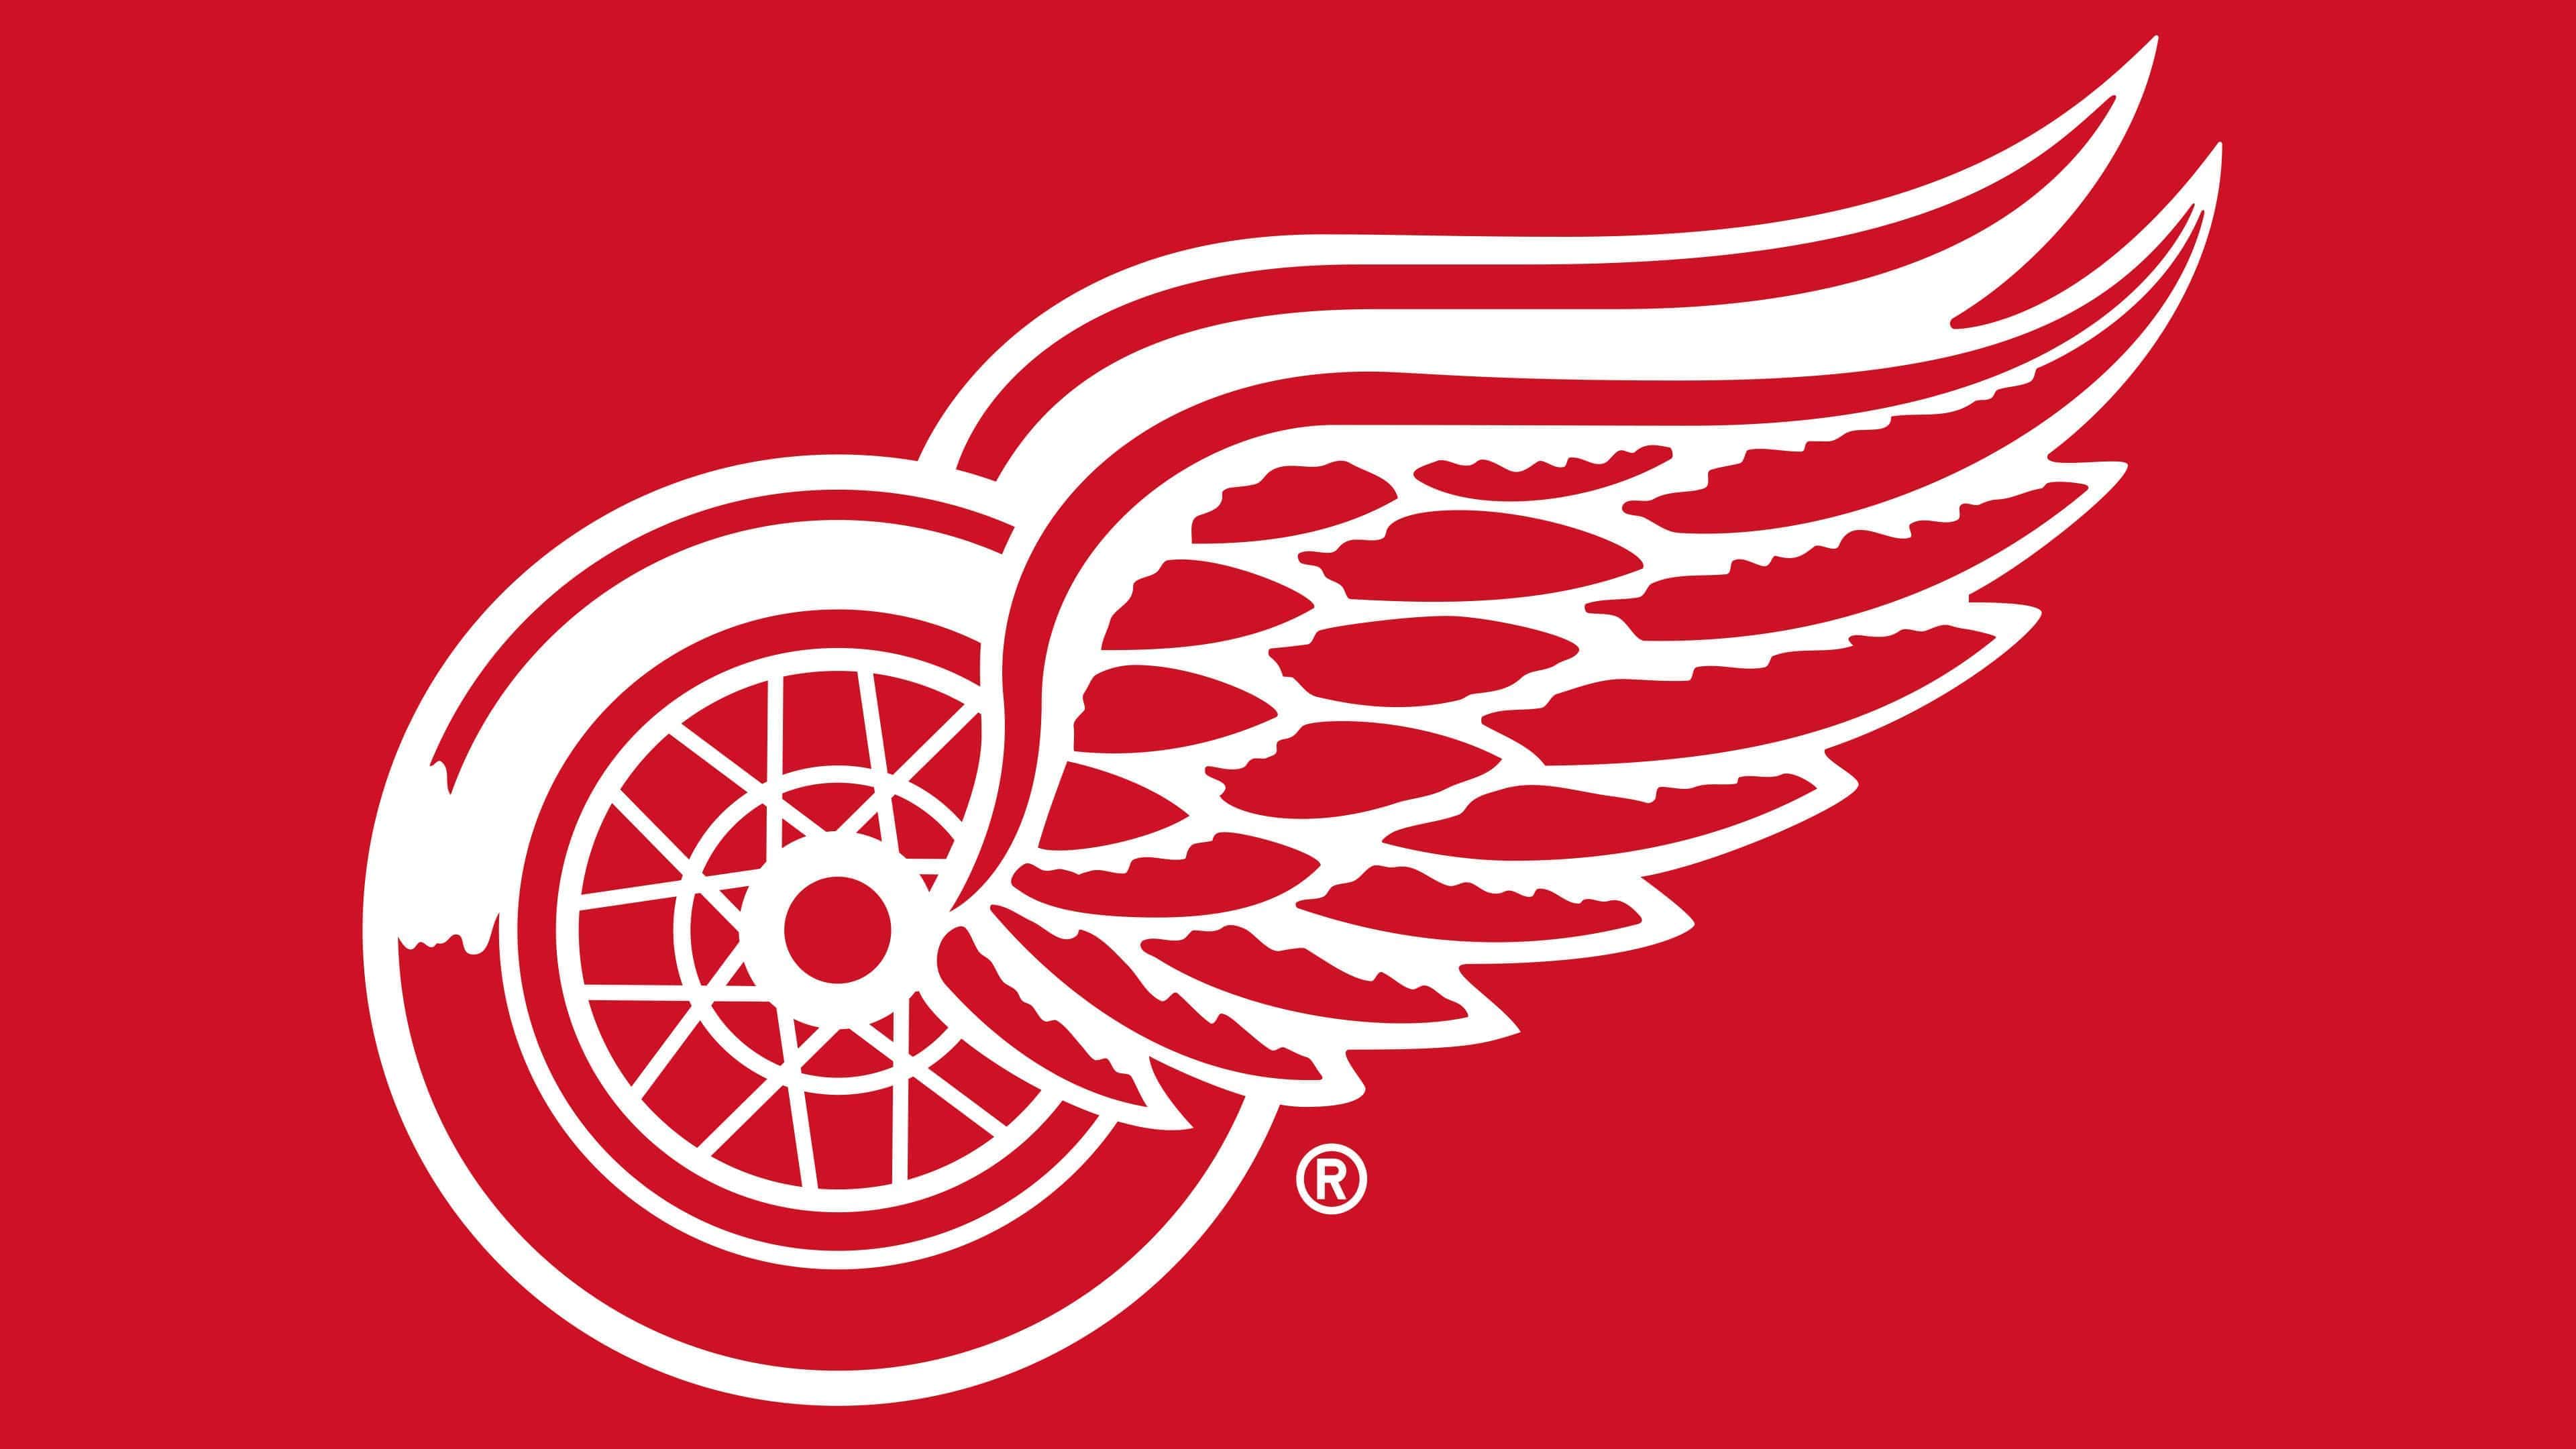 Detroit red wings